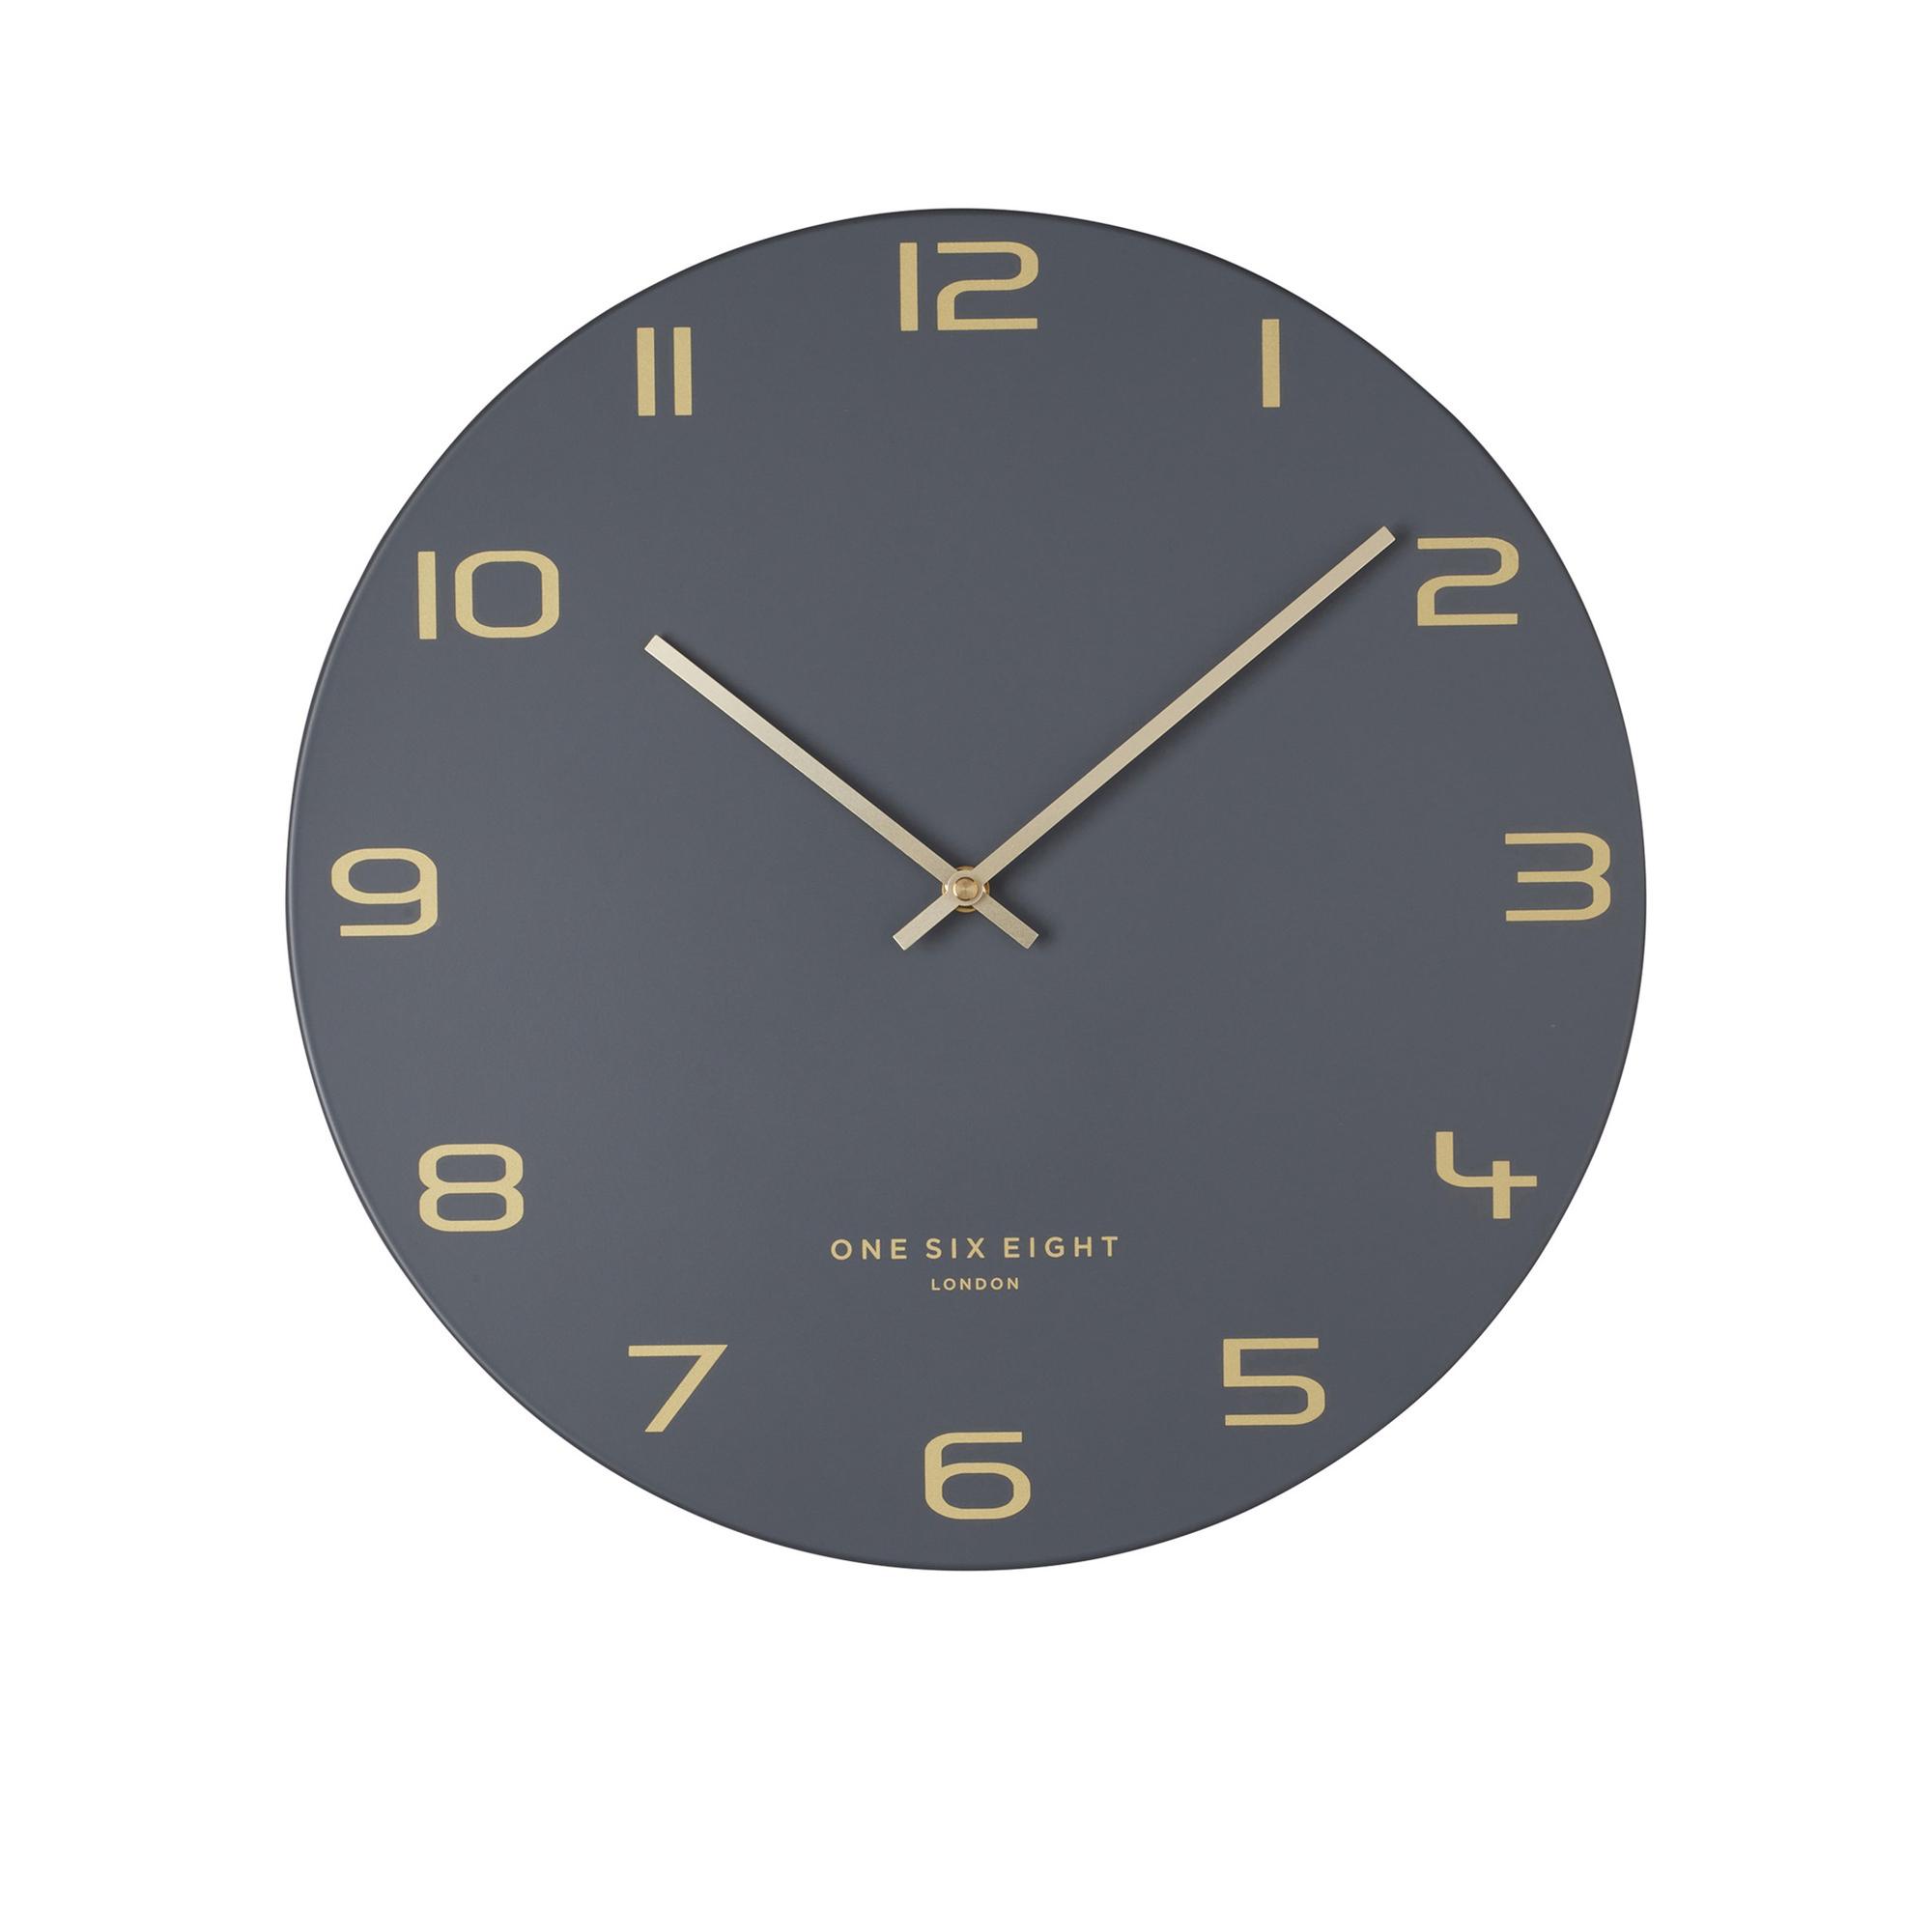 One Six Eight London Blake Silent Wall Clock 40cm Charcoal Grey Image 1